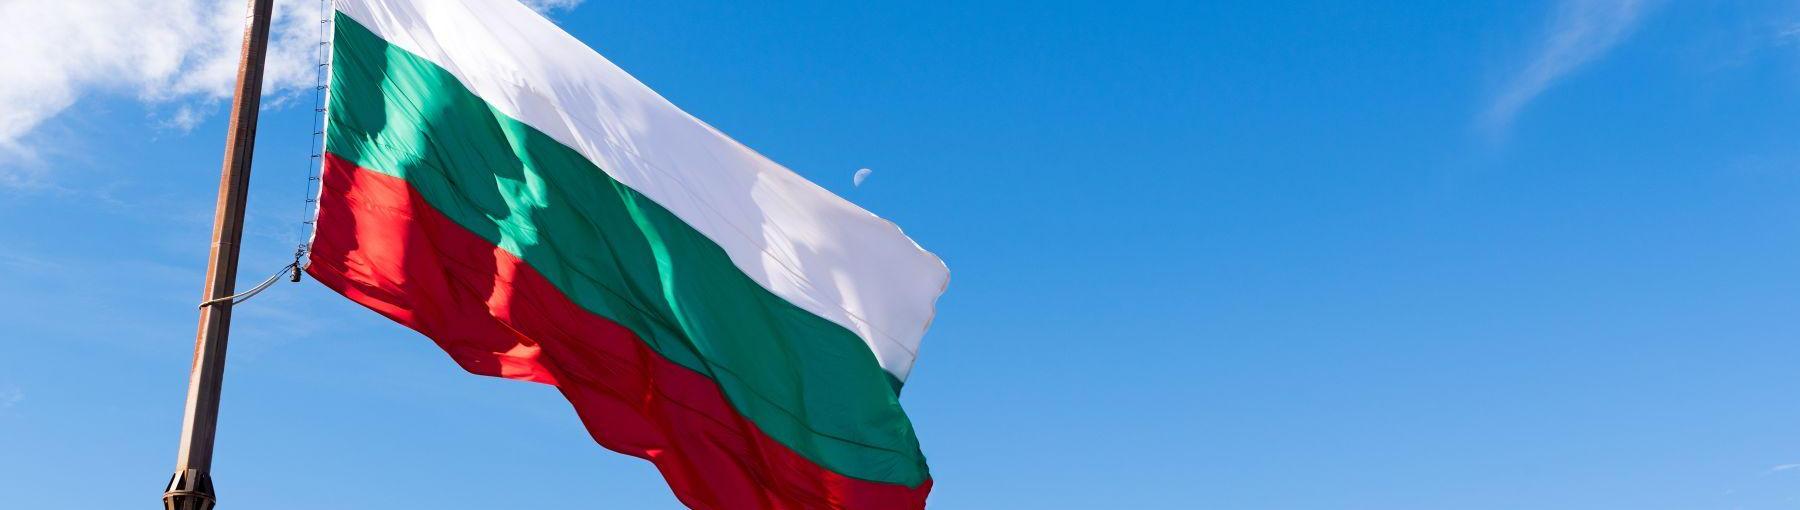 Flaga Bułgarii Fot. Shutterstock